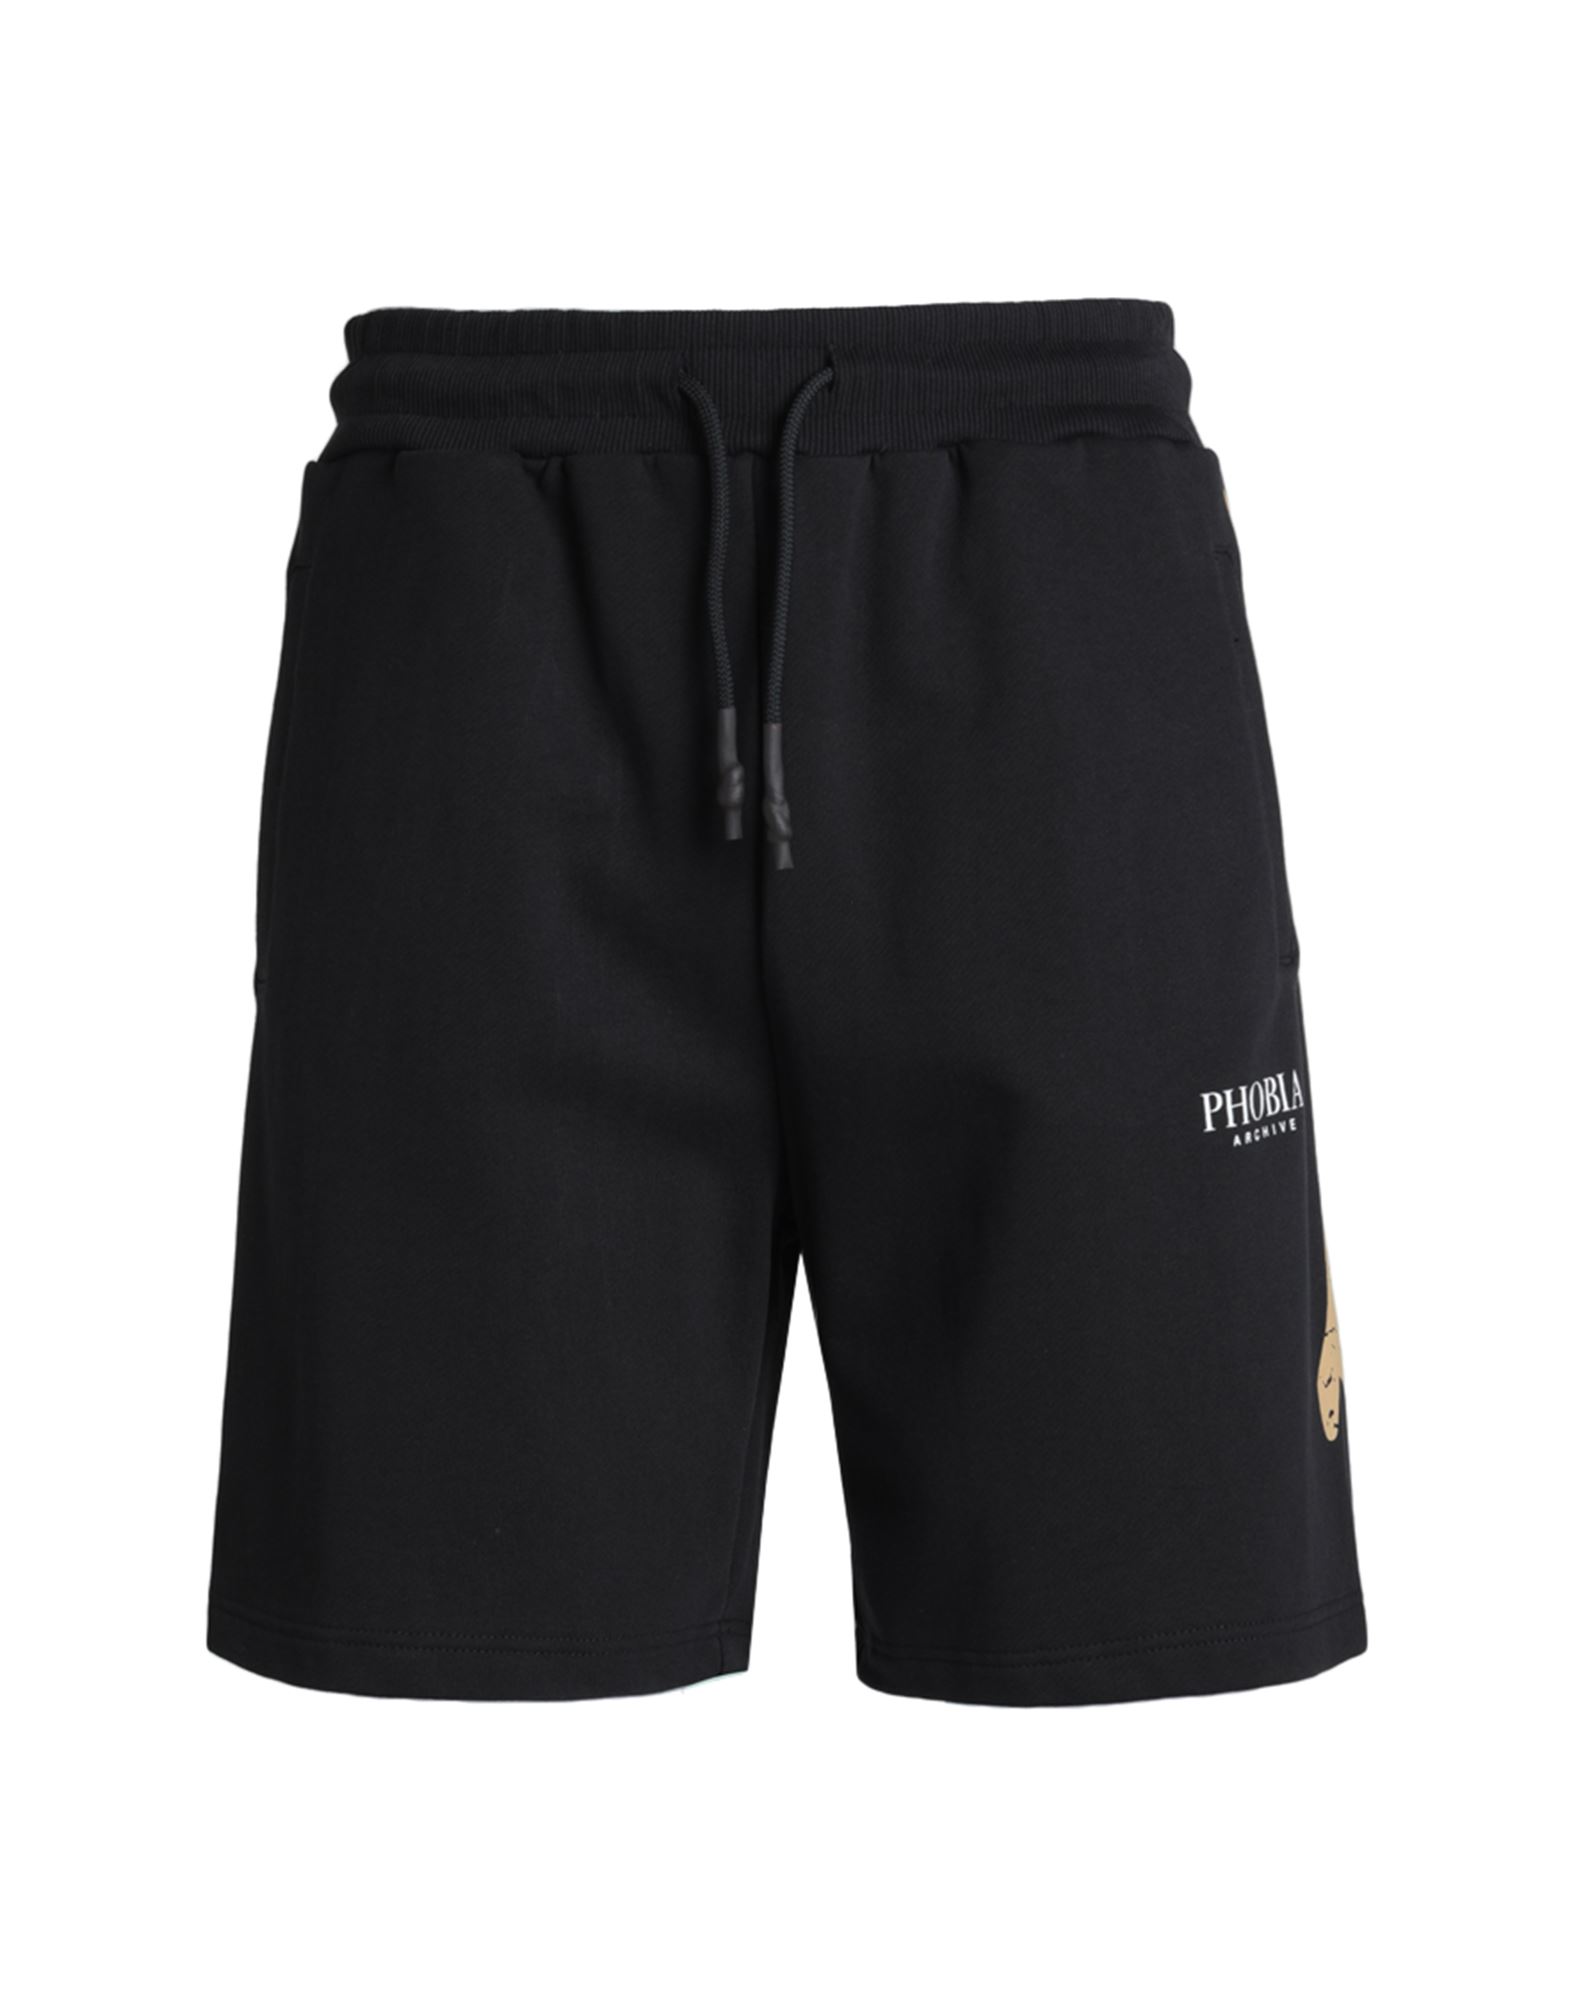 Phobia Archive Shorts With Beige Skeleton Man Shorts & Bermuda Shorts Black Size L Cotton